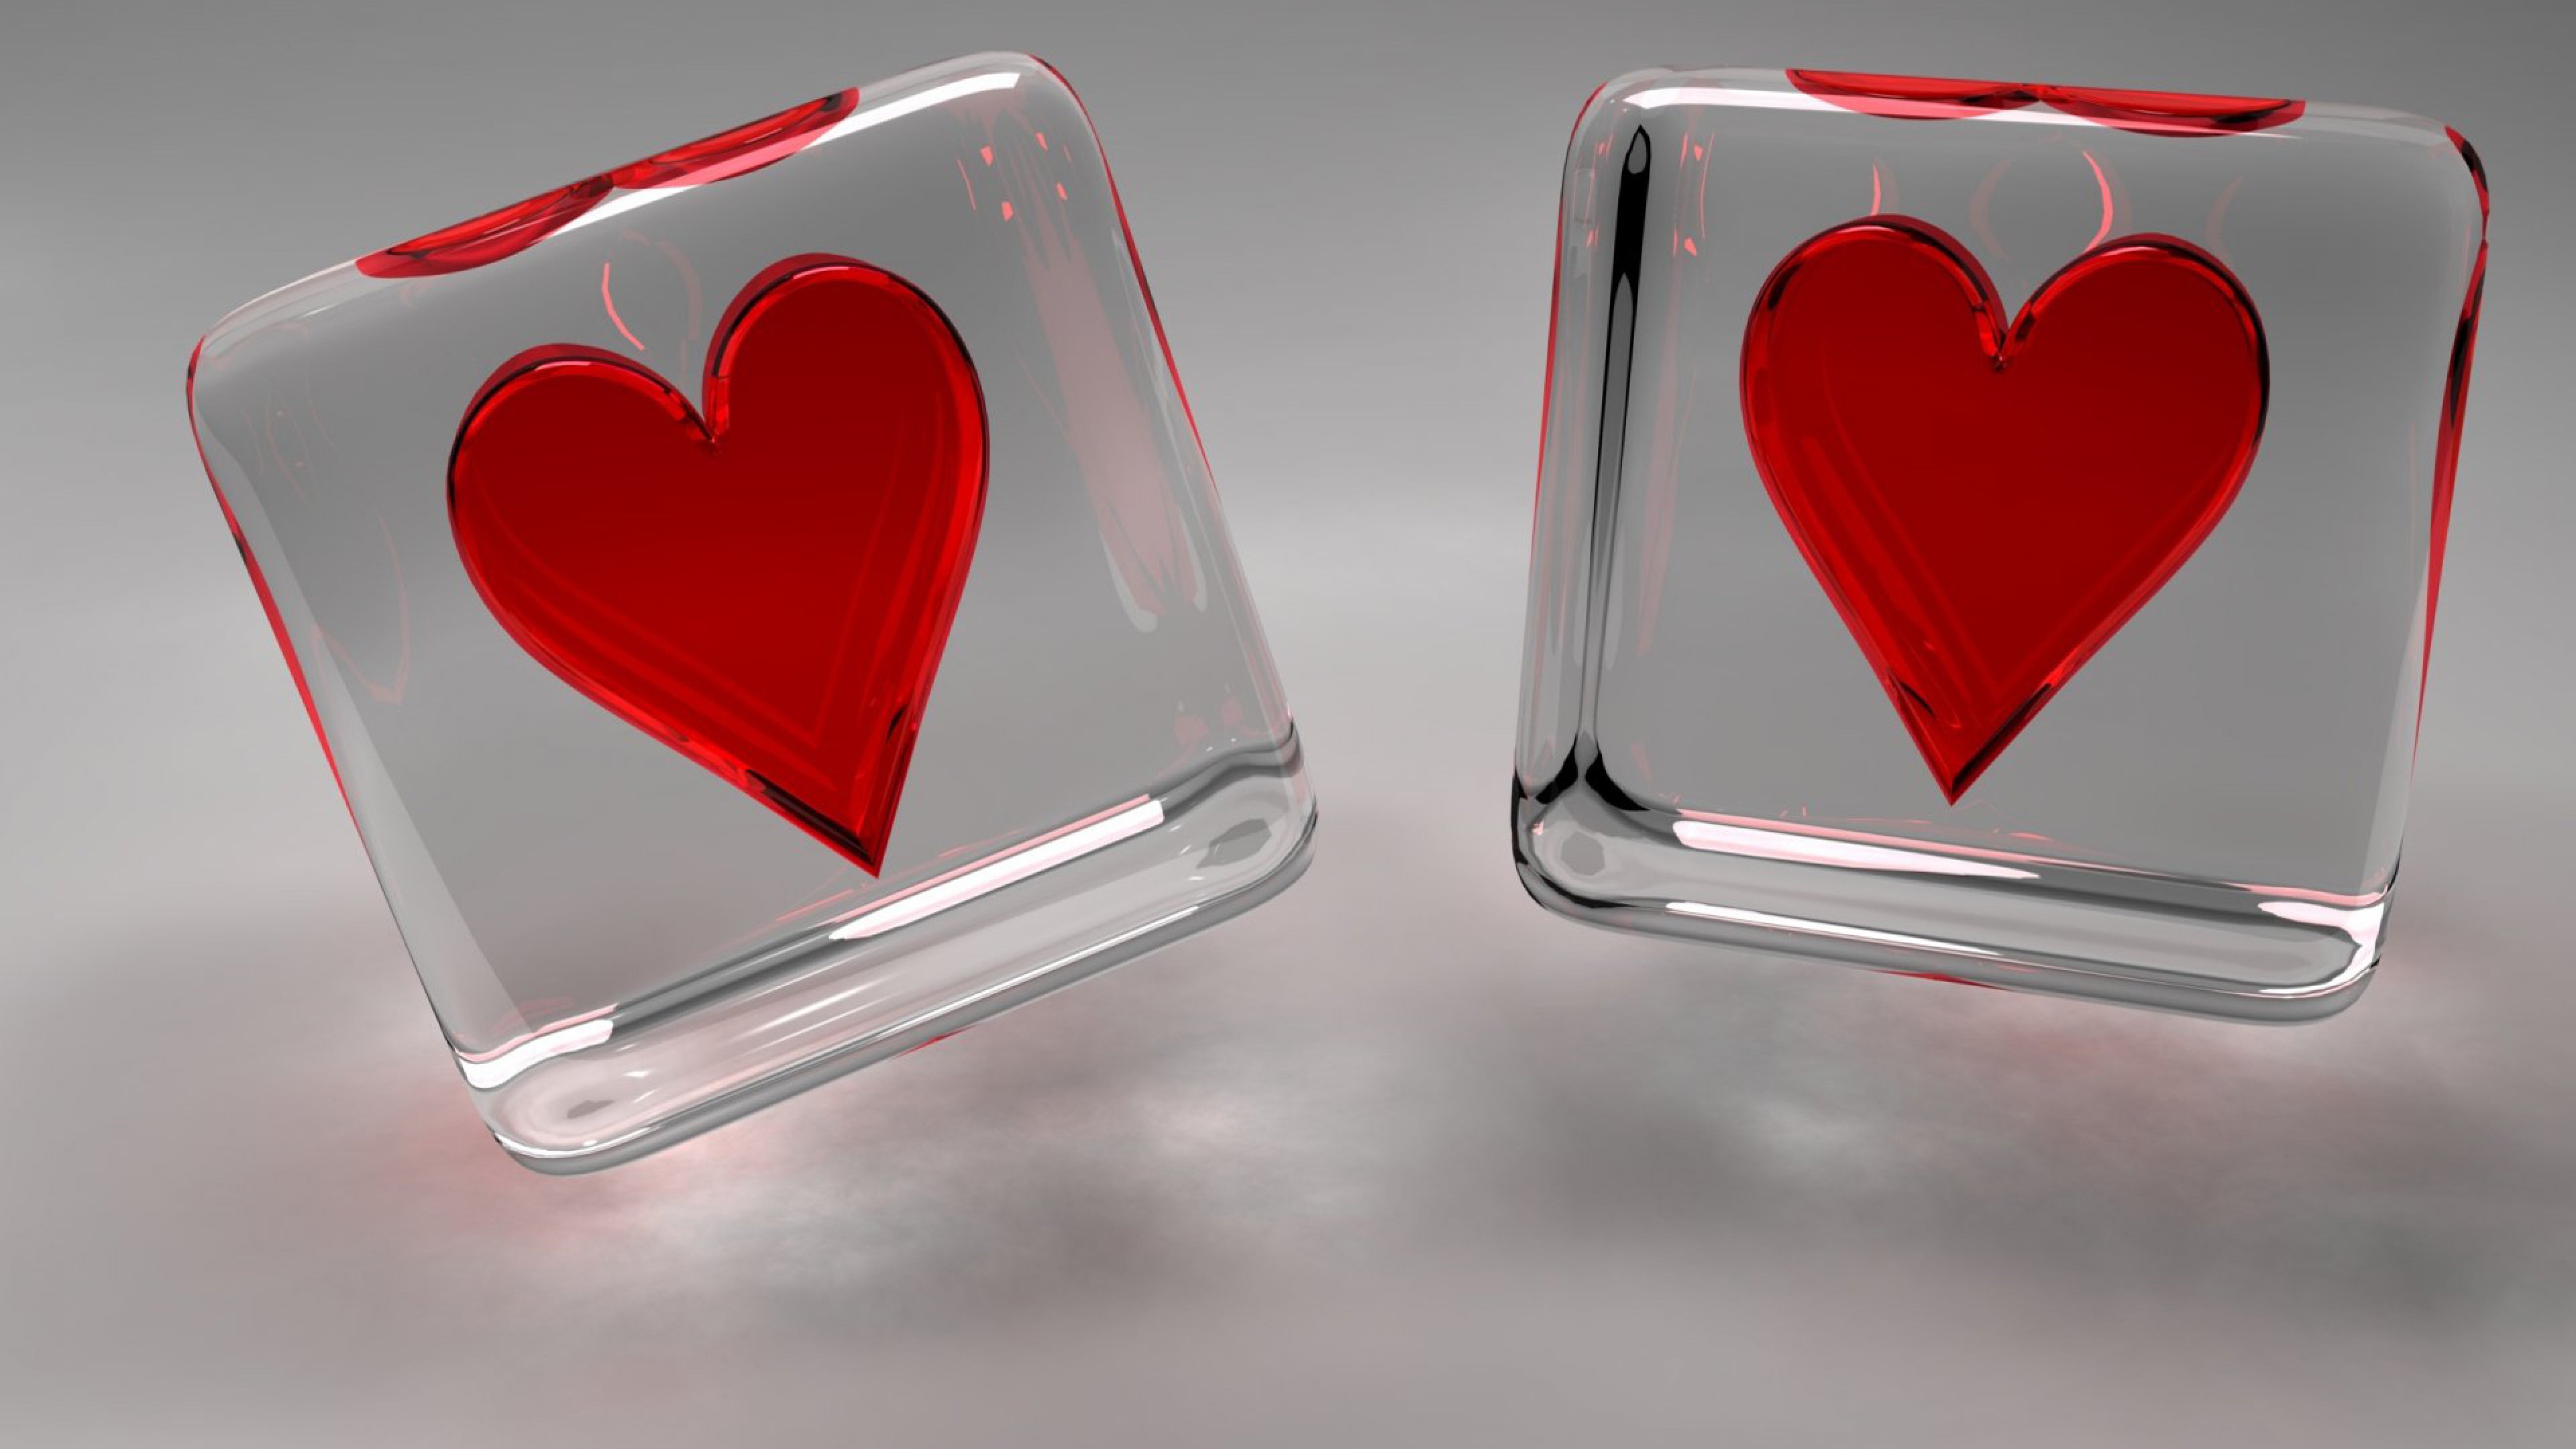 Love quality. Картинки на рабочий стол сердечки. Стеклянное сердце. Стеклянное сердечко. Необычное сердце.